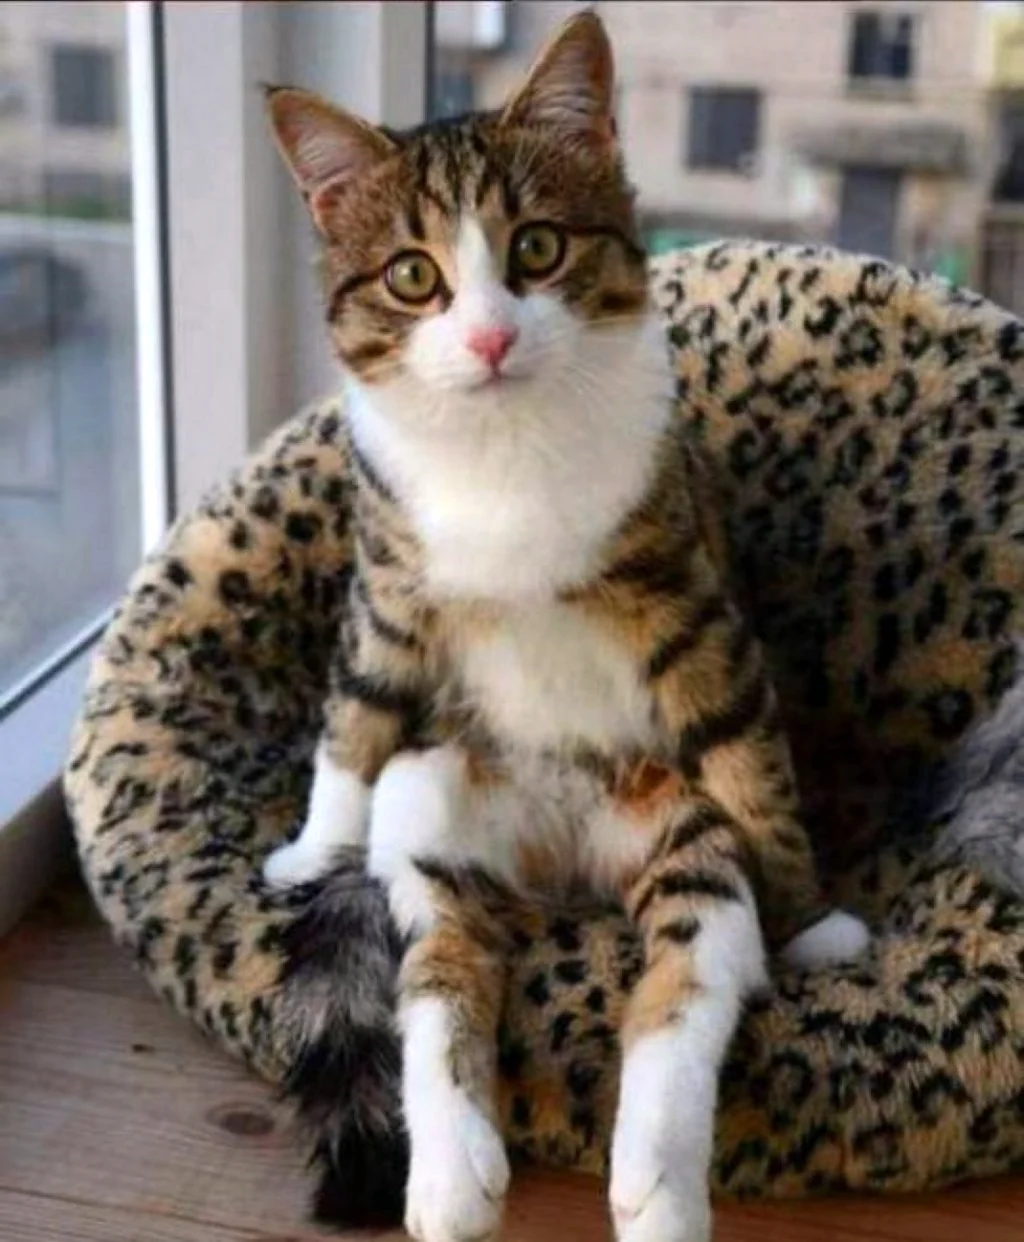 Сидячая кошка. Красивое животное